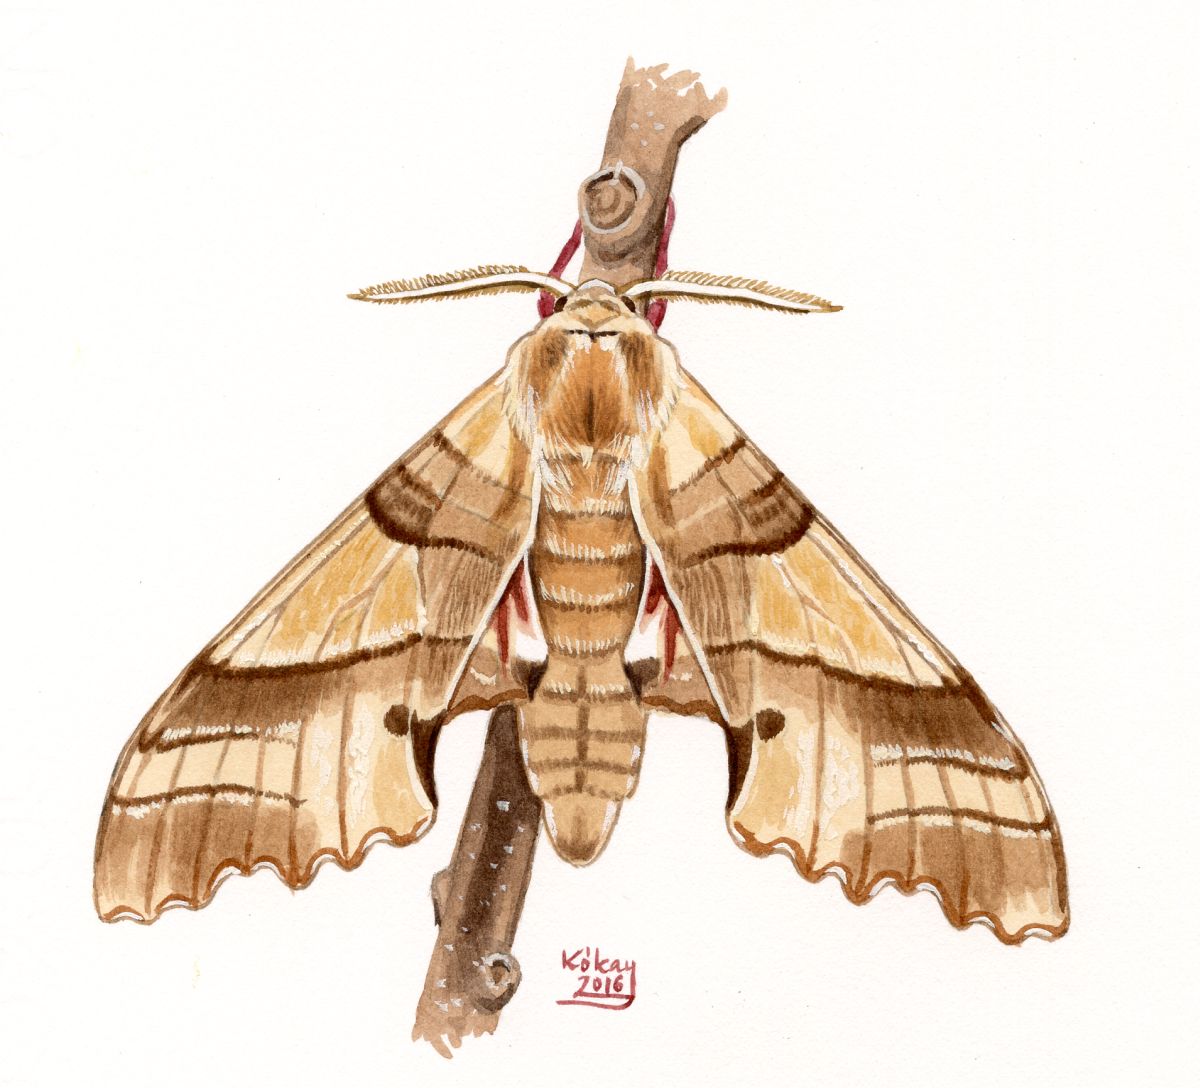 Oak Hawk-moth (Marumba quercus), watercolour and bodycolour on paper